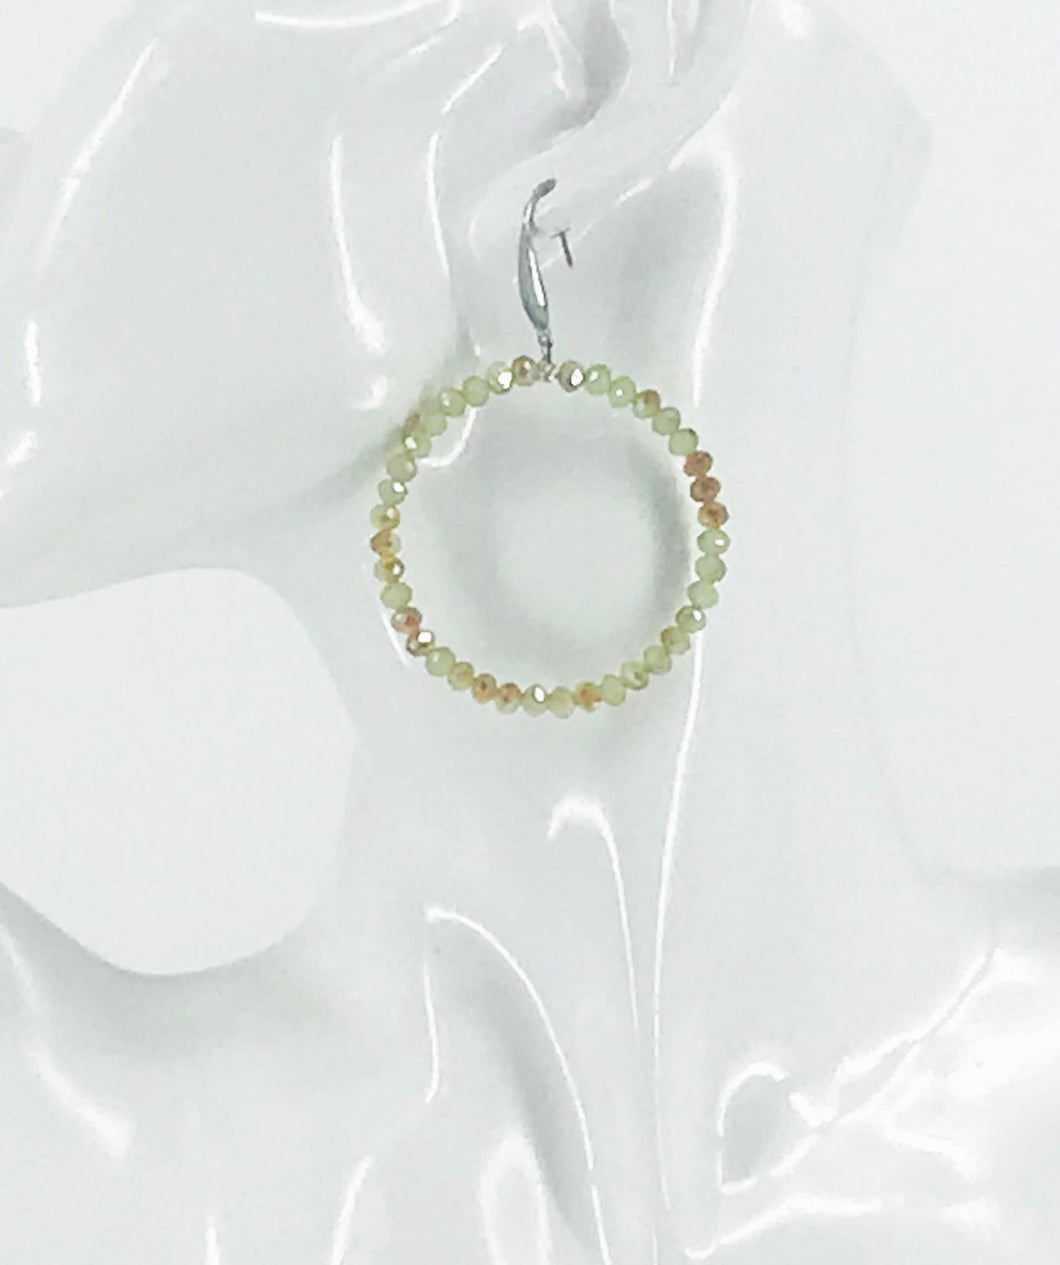 Dark Sea Green Glass Bead Hoop Earrings - E19-2404